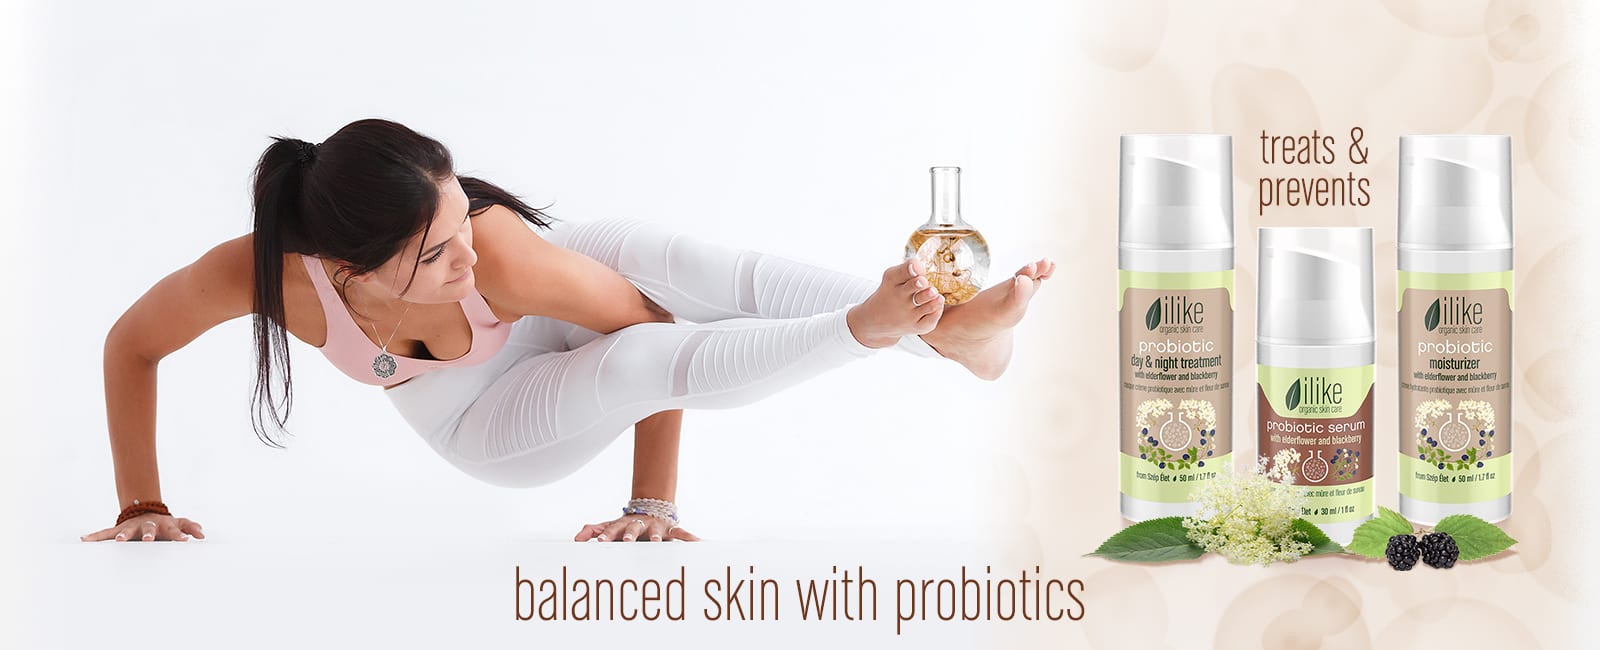 Balanced skin with probiotics